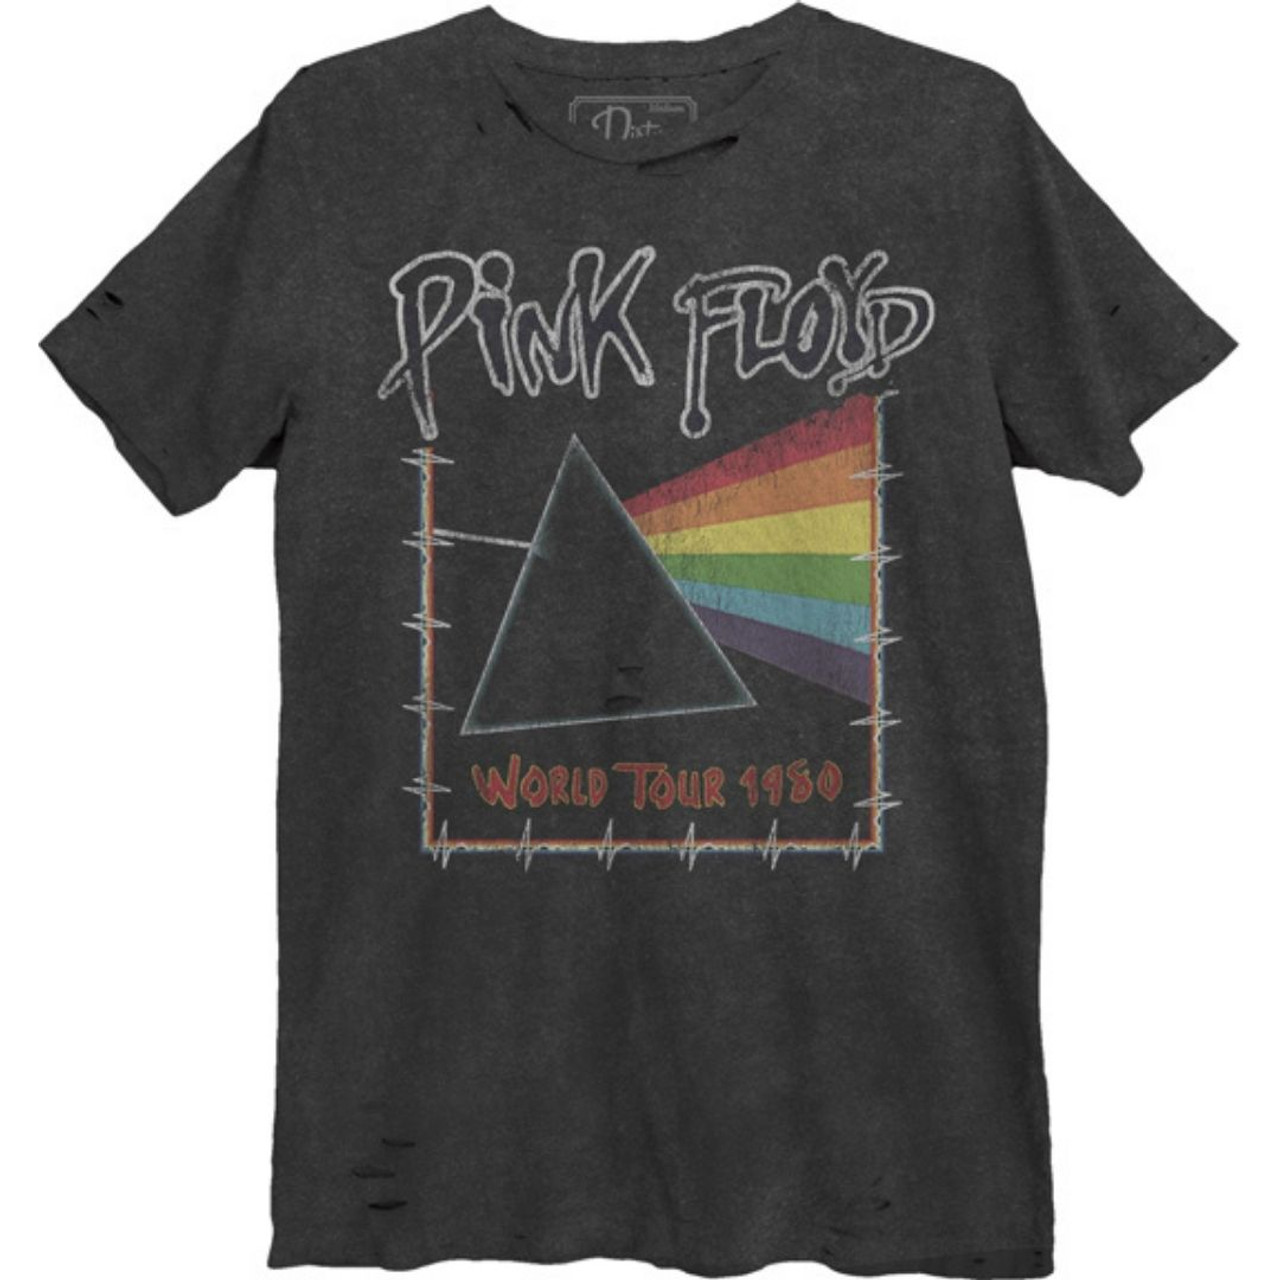 Pink Floyd Vintage Concert T-Shirt by Dirty Cotton Scoundrels - World Tour 1980 | Men's Unisex Distressed Fashion Shirt